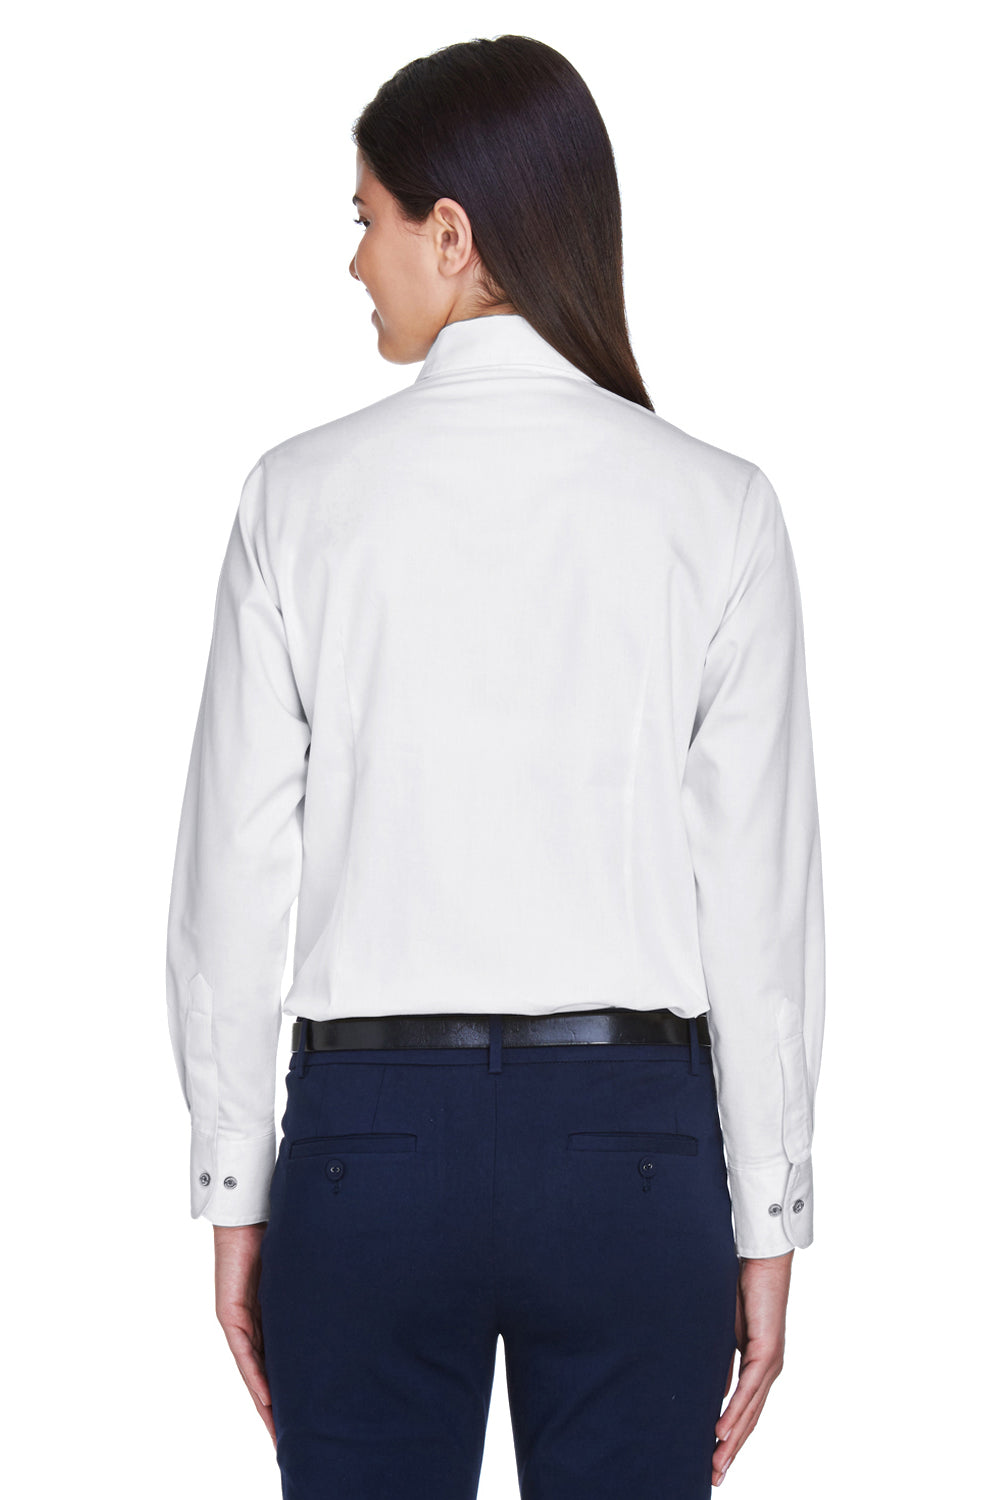 Harriton M500W Womens Wrinkle Resistant Long Sleeve Button Down Shirt White Back